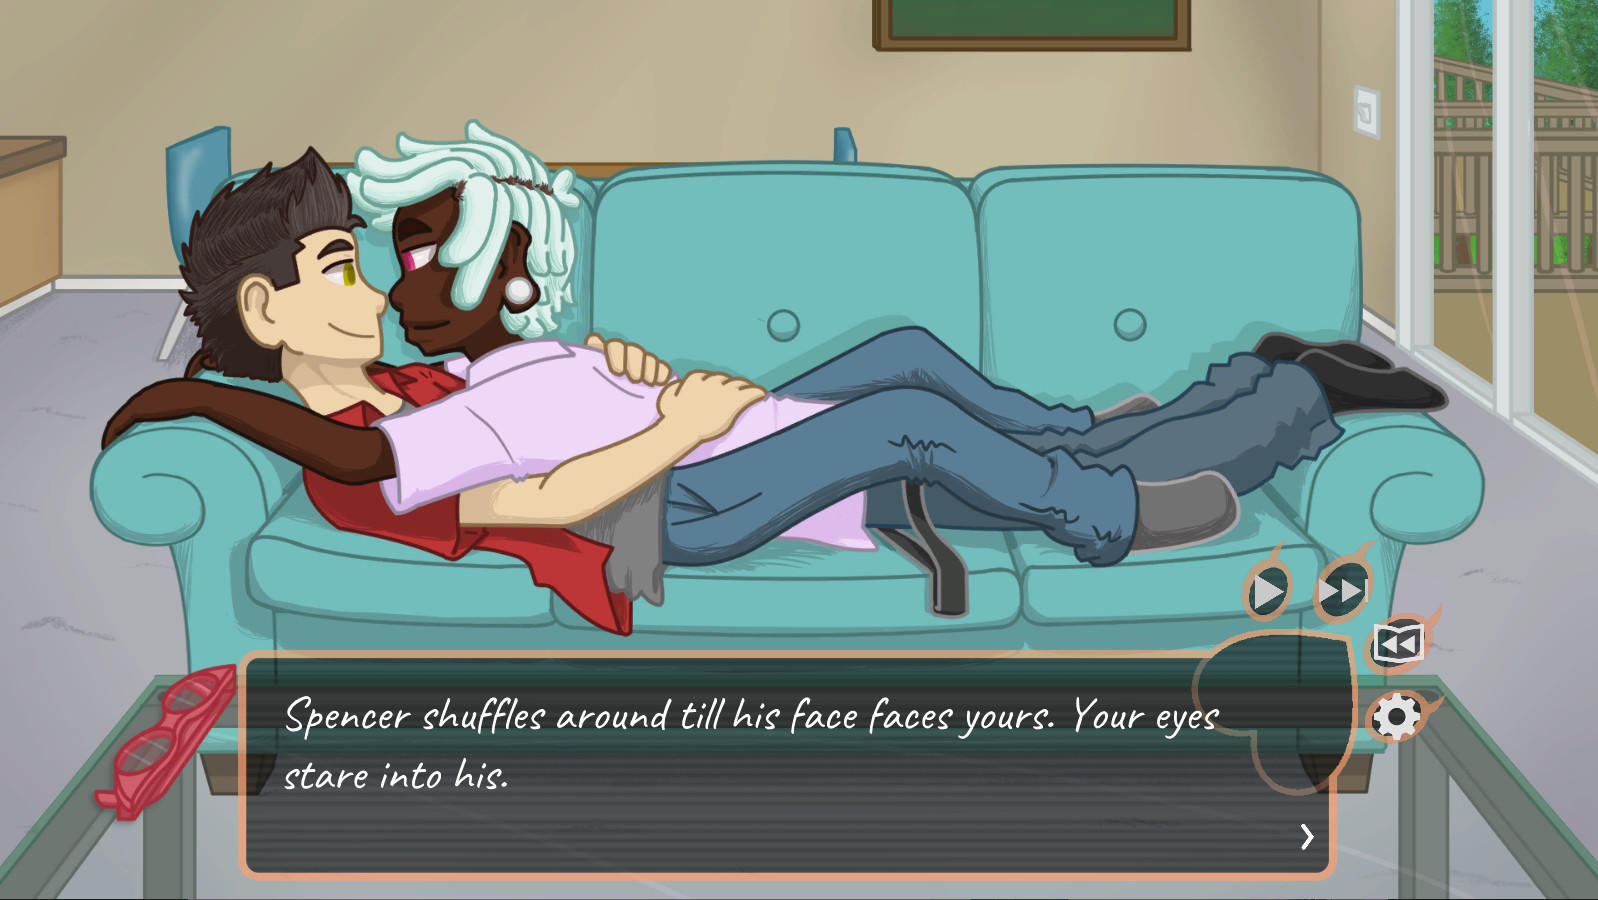 My Boyfriend's a Werecat! screenshot game